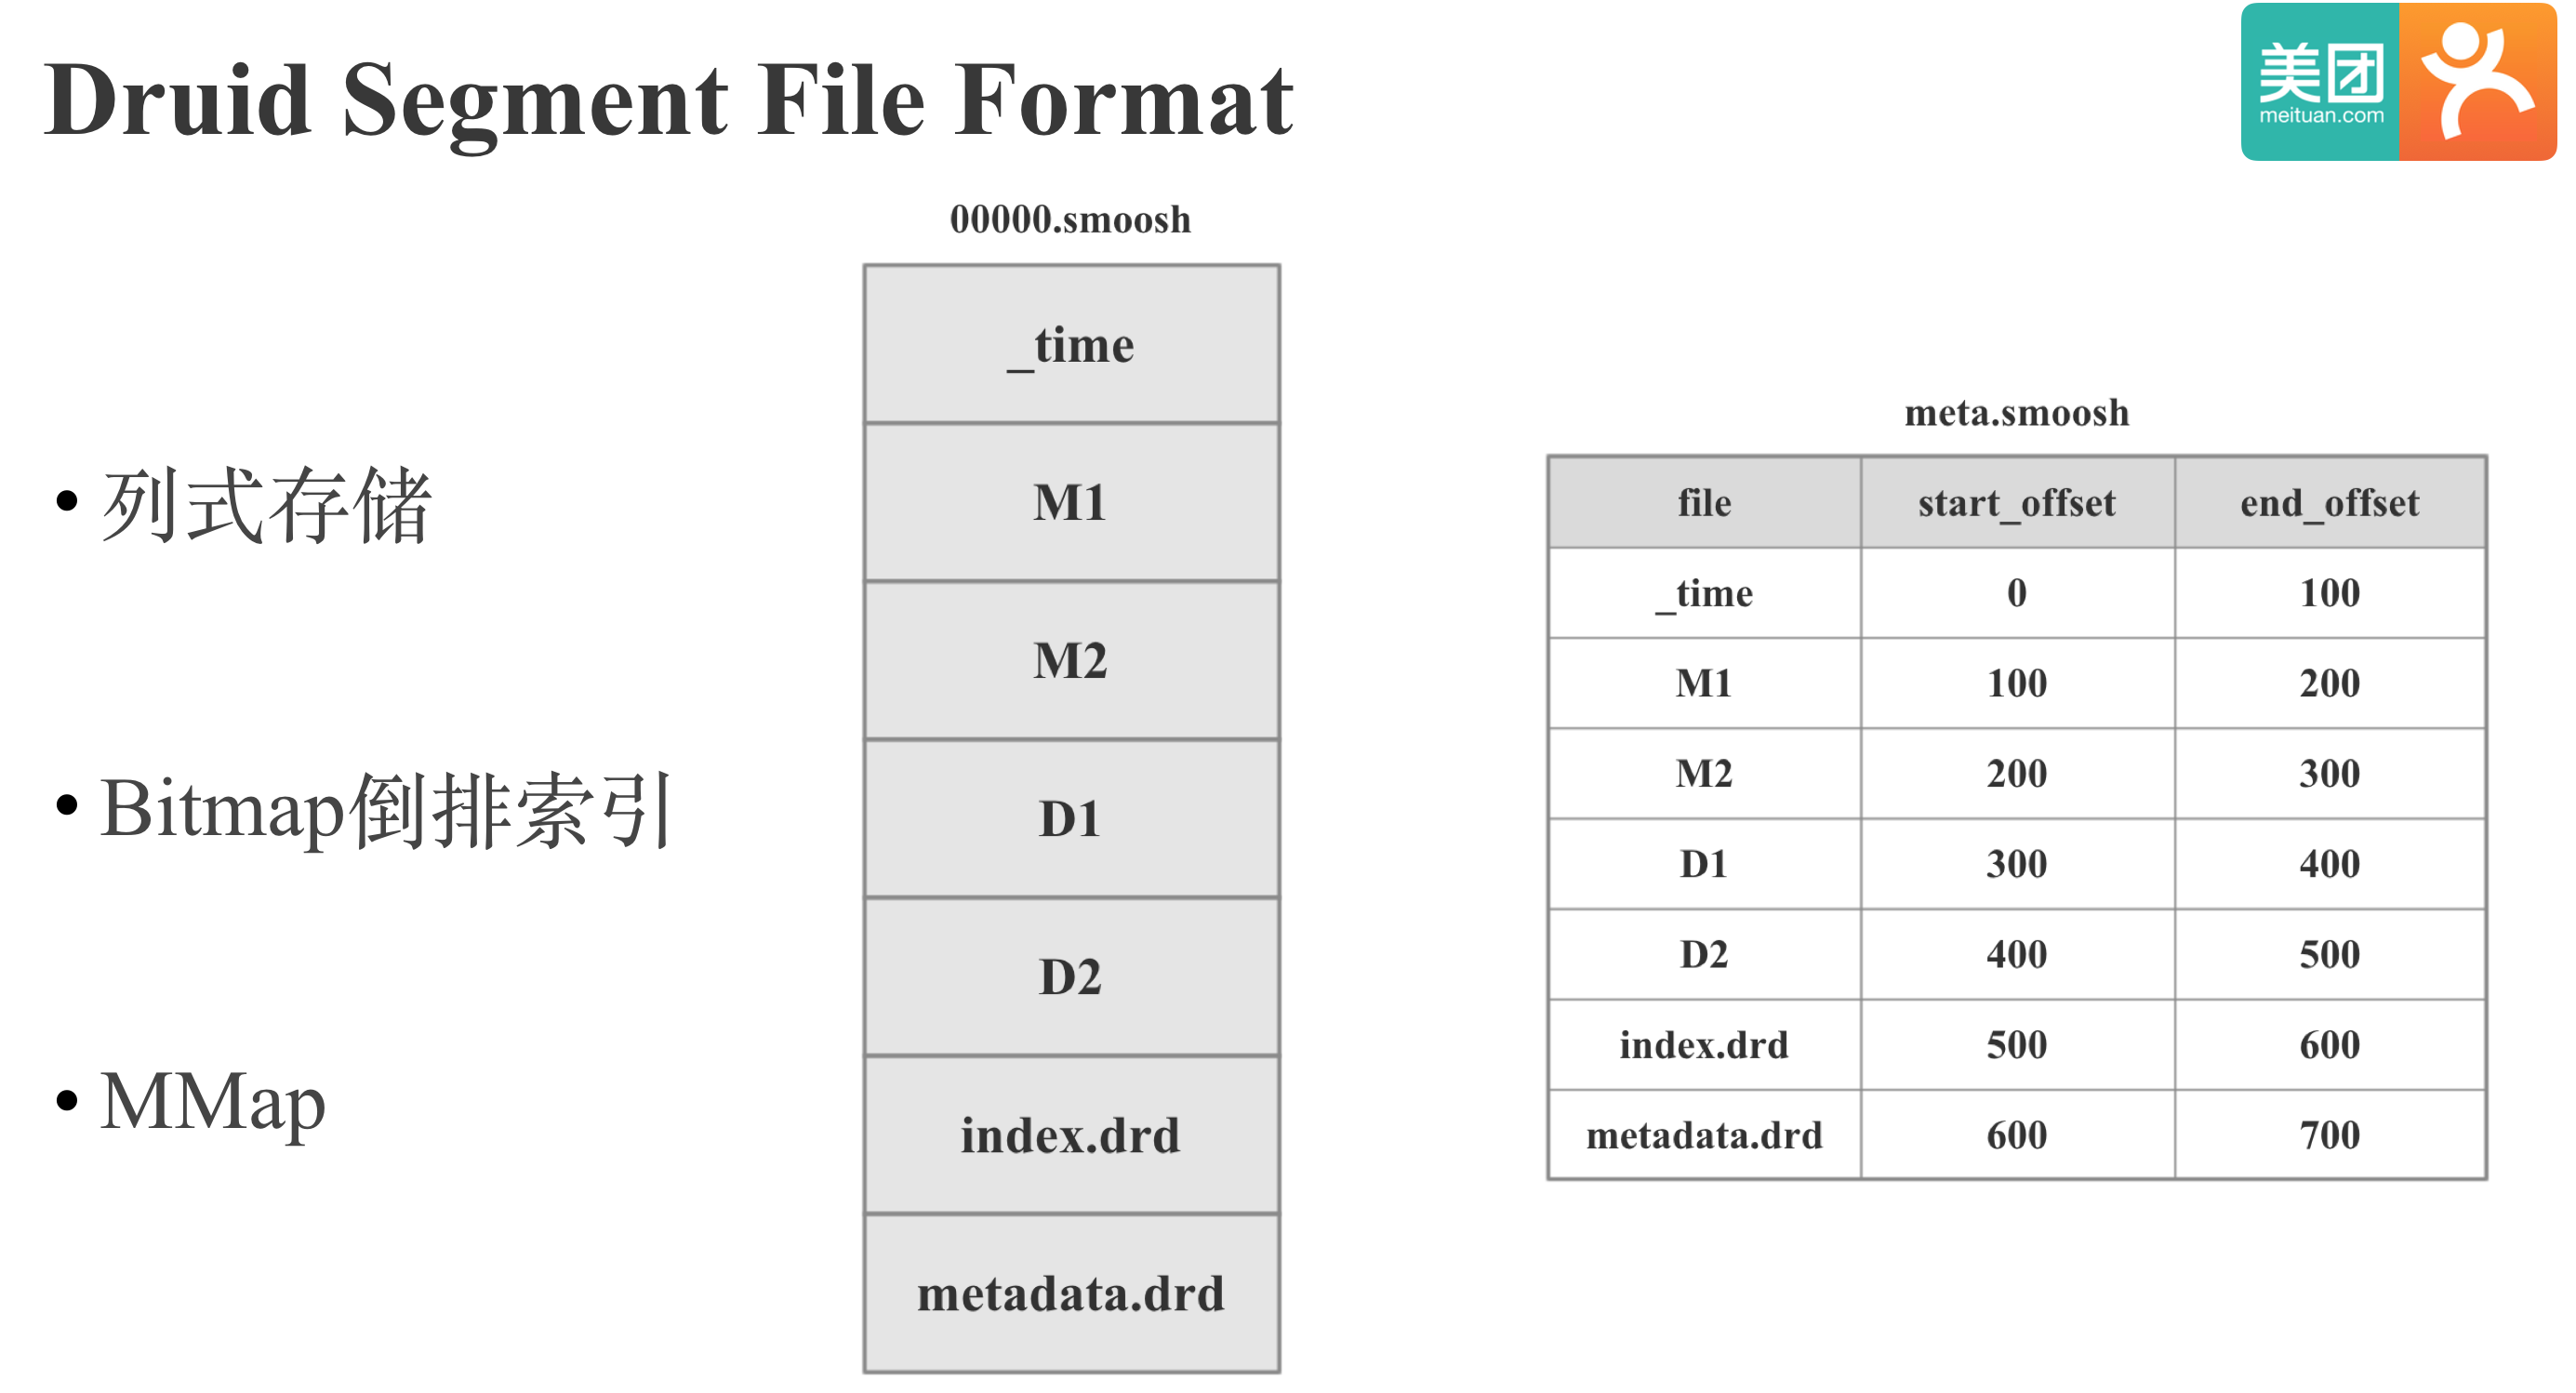 Druid Segment File Format